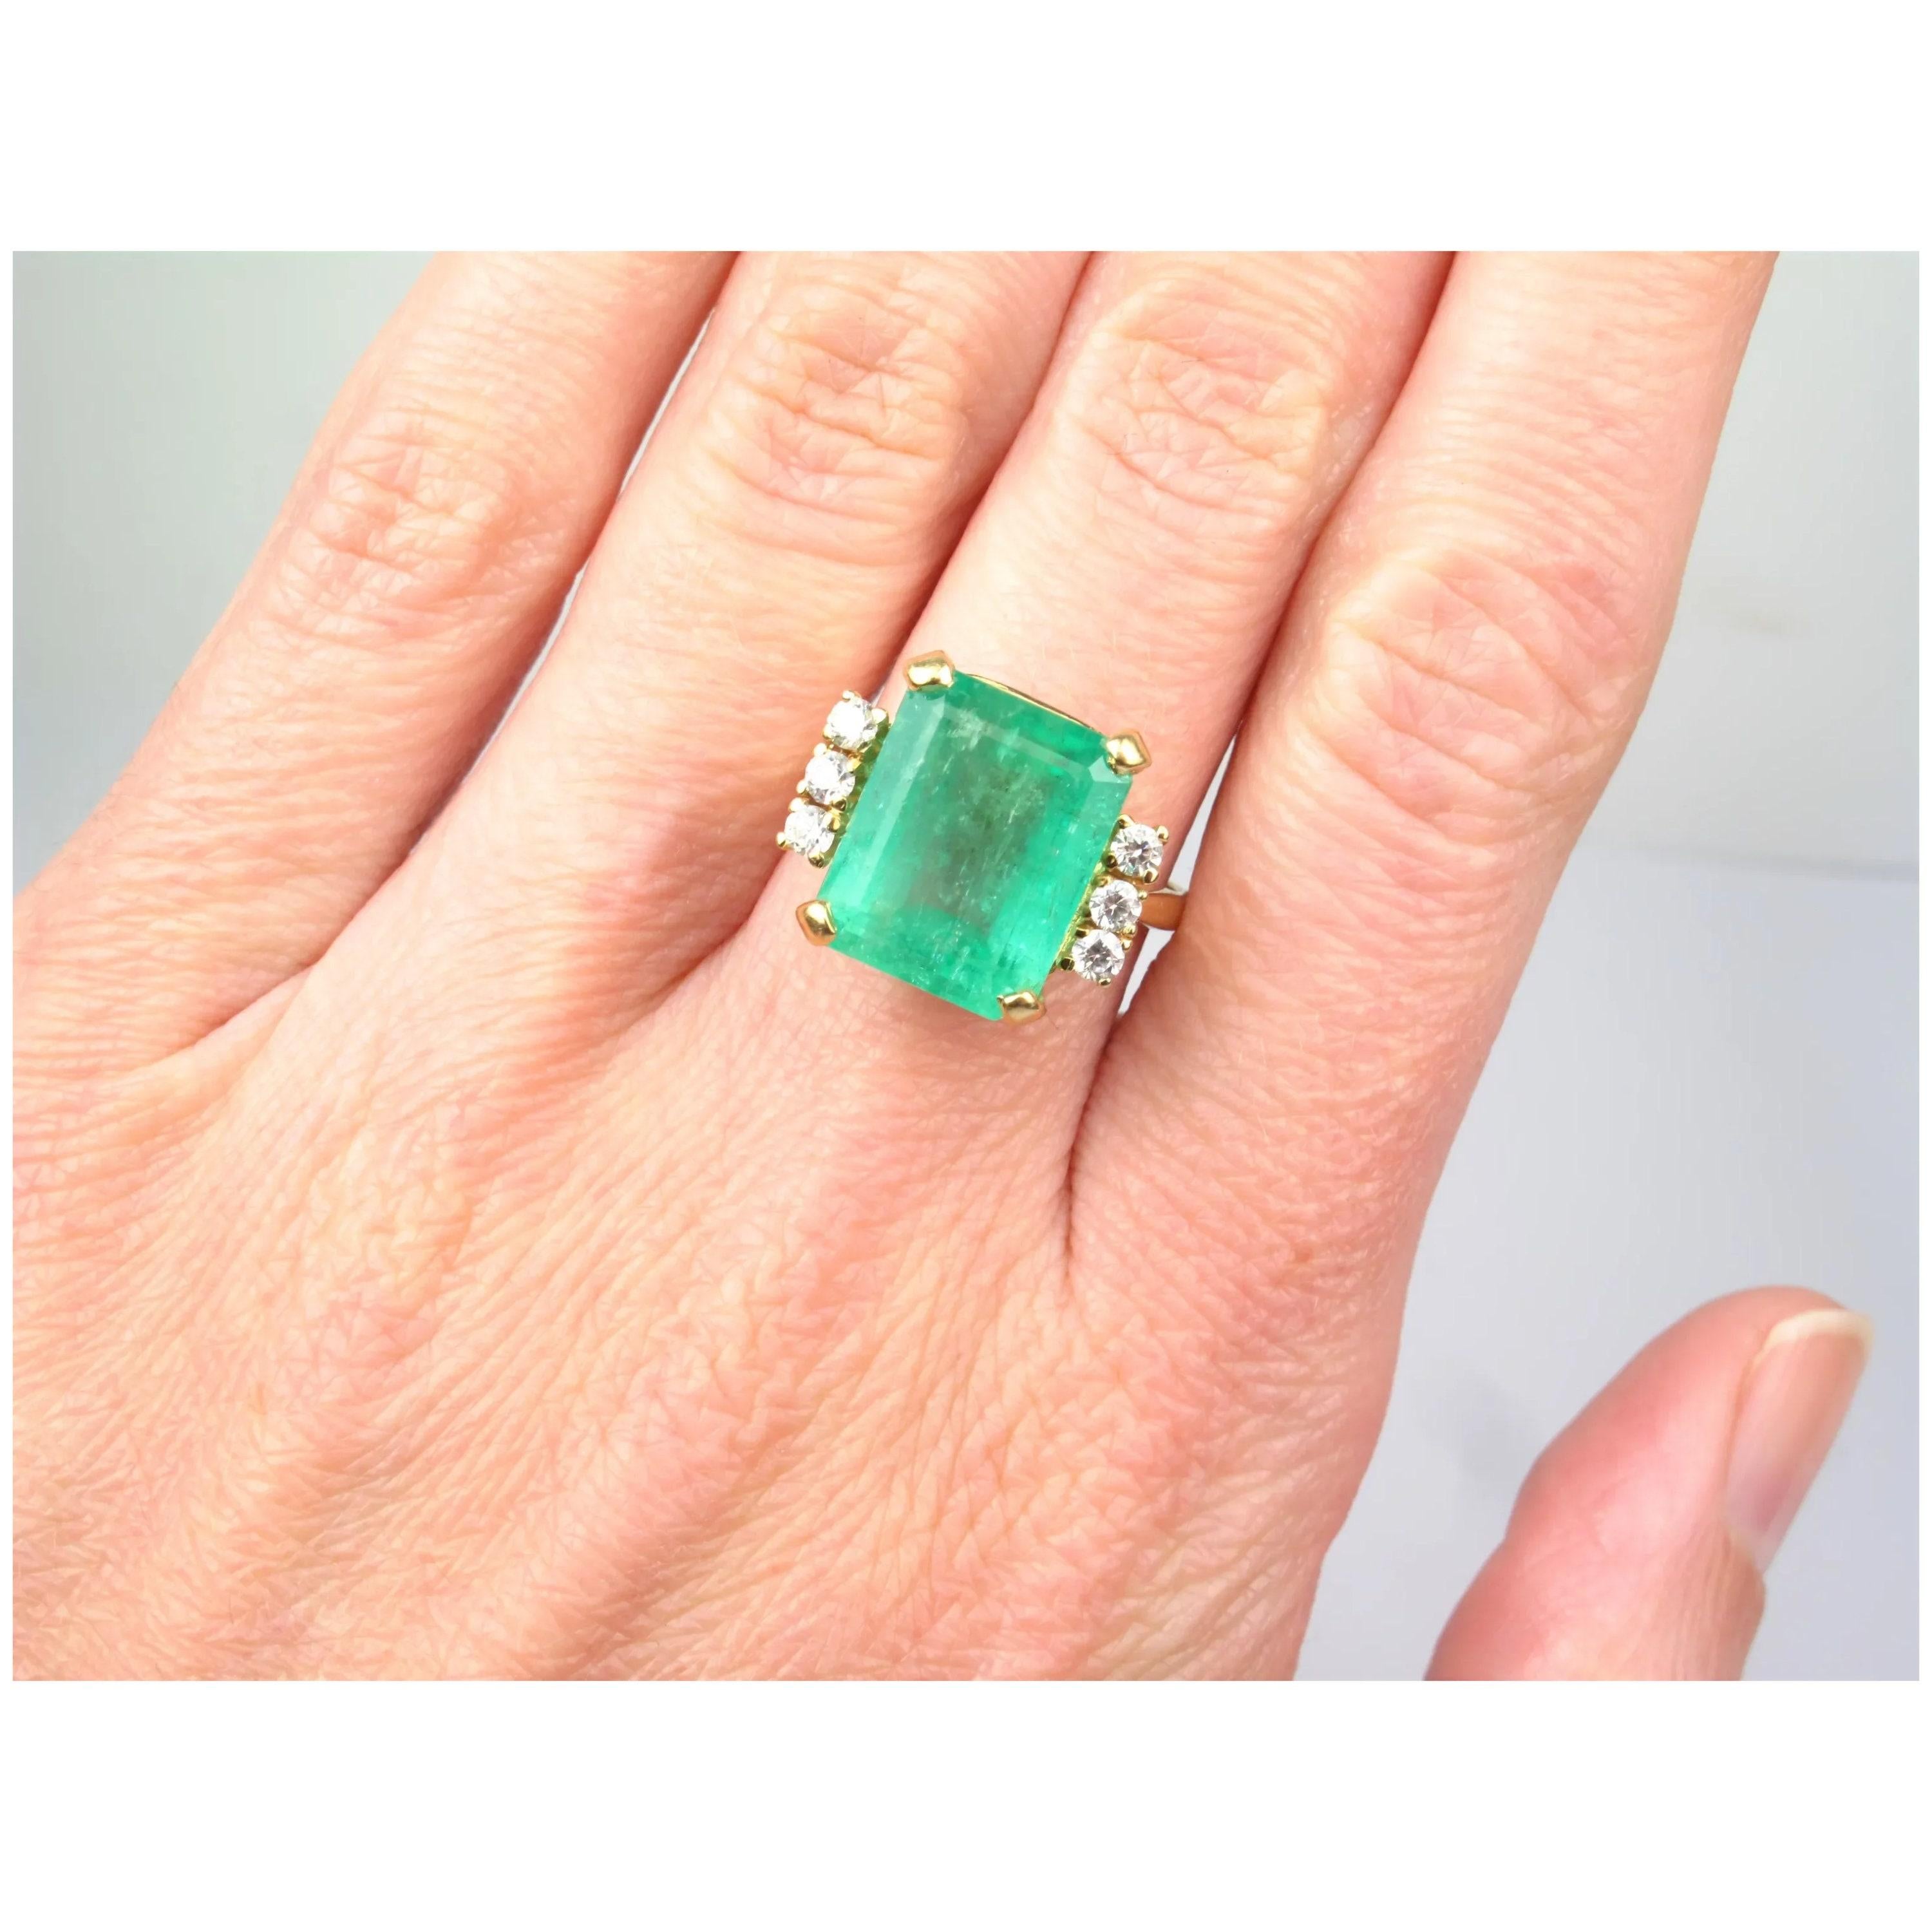 For Sale:  Unique 3.2 Carat Emerald Diamond Engagement Ring Diamond Yellow Gold Bridal Ring 5